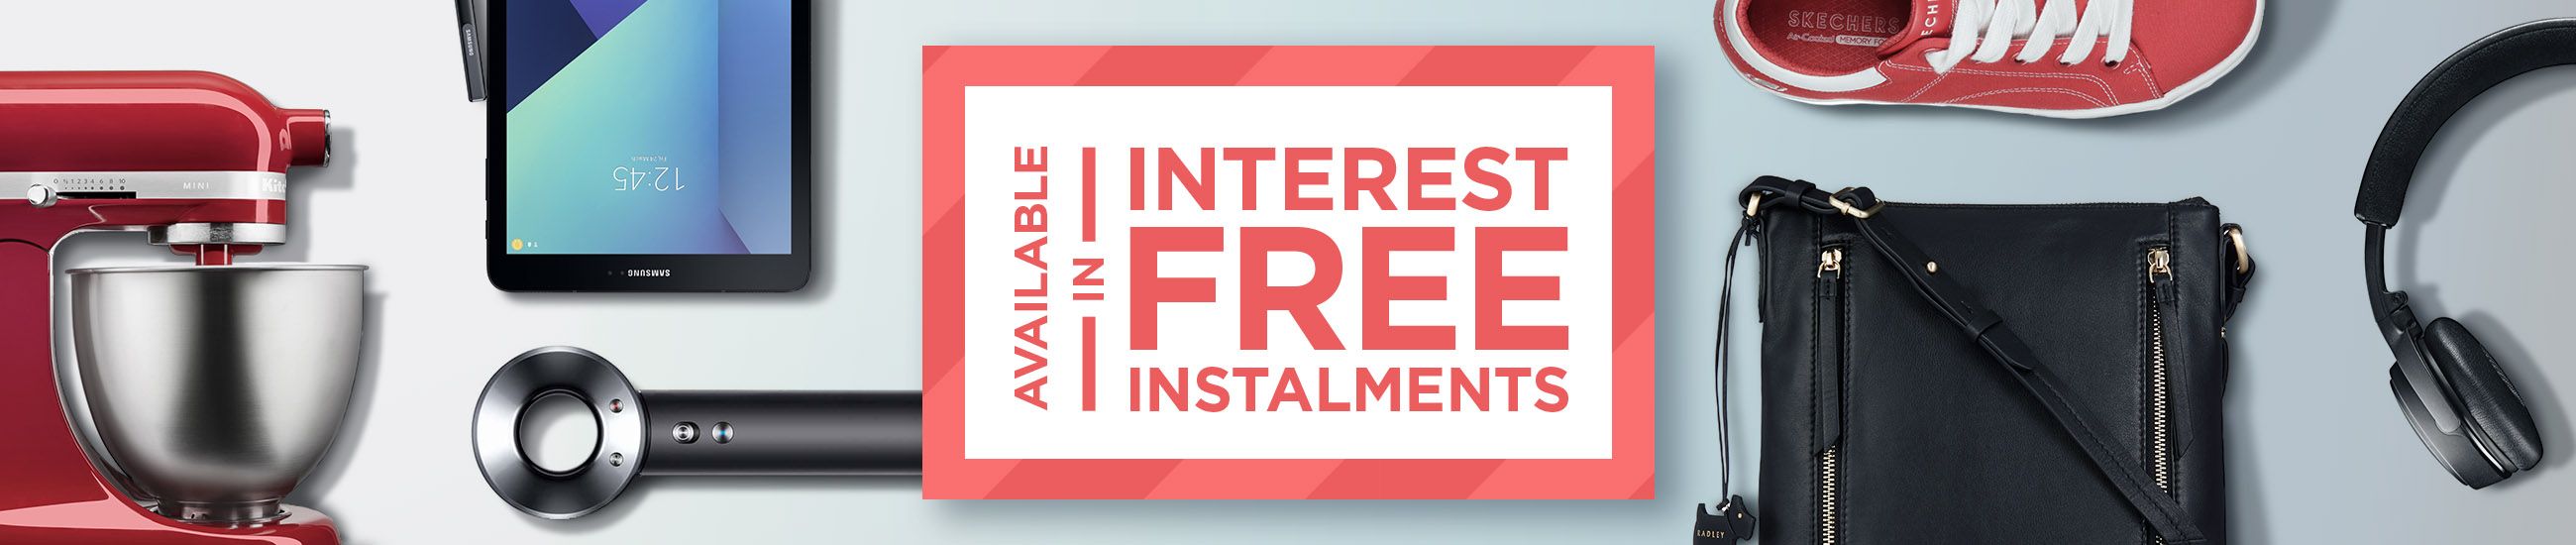 Interest-free instalments